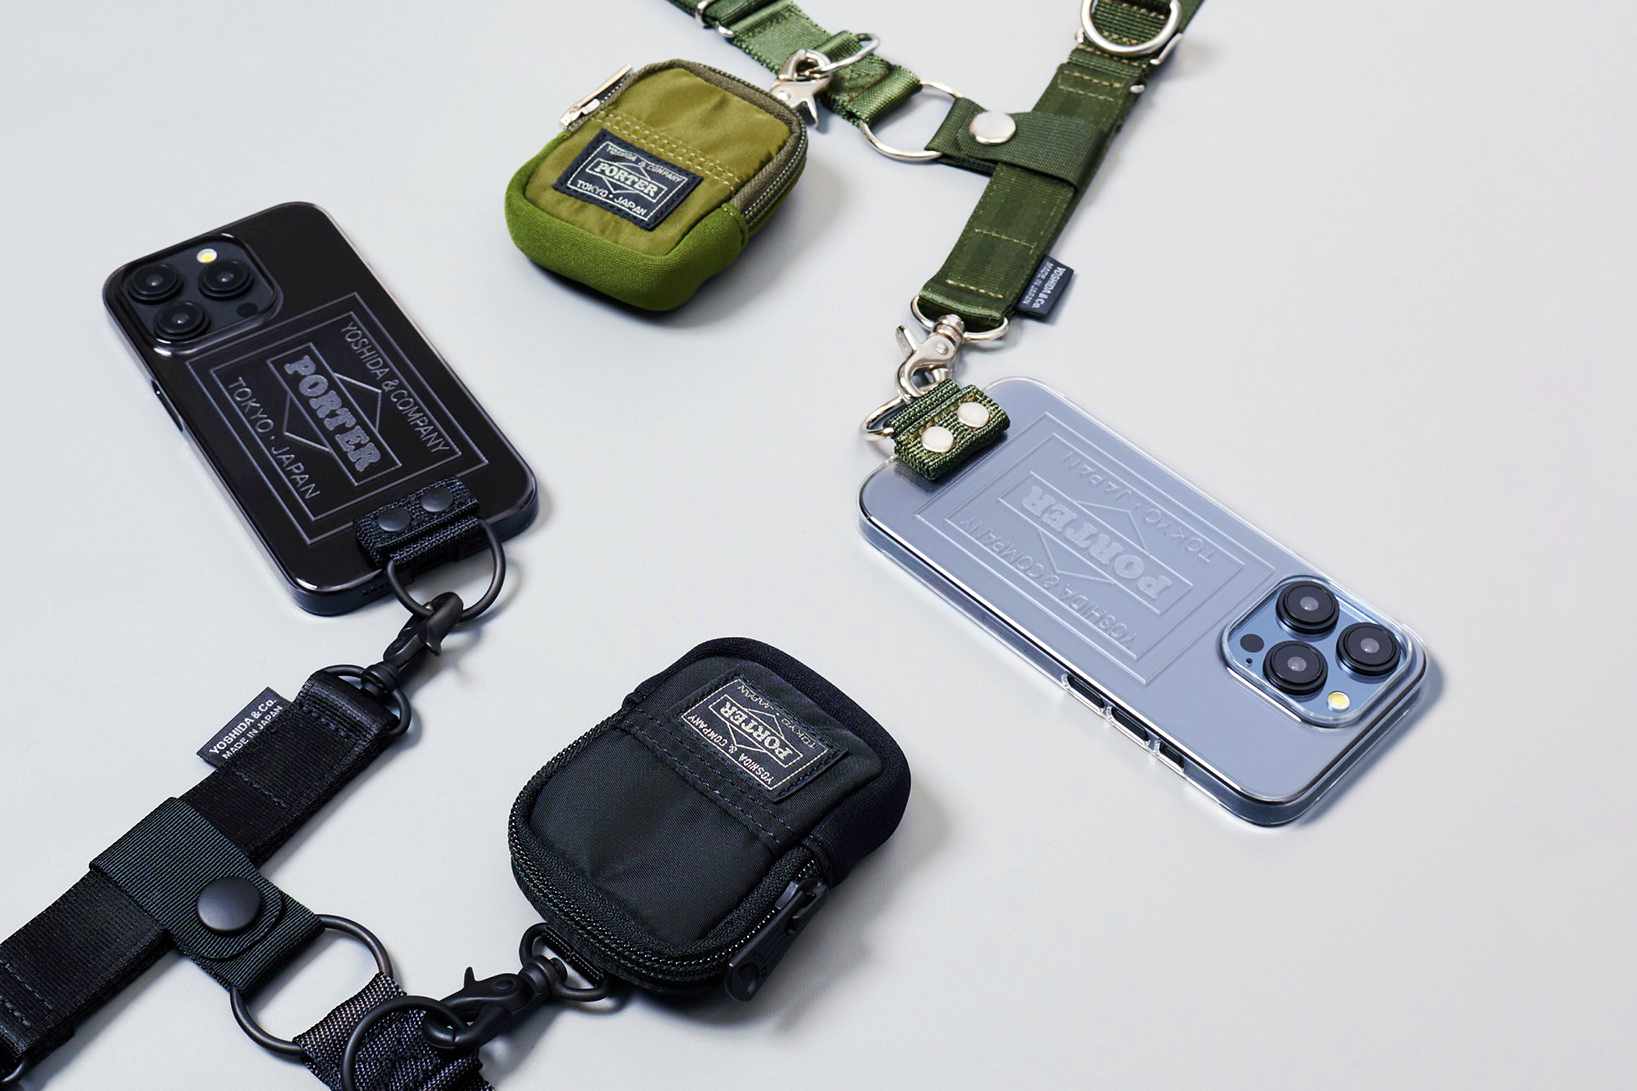 Yoshida Porter's phone sling in black and green